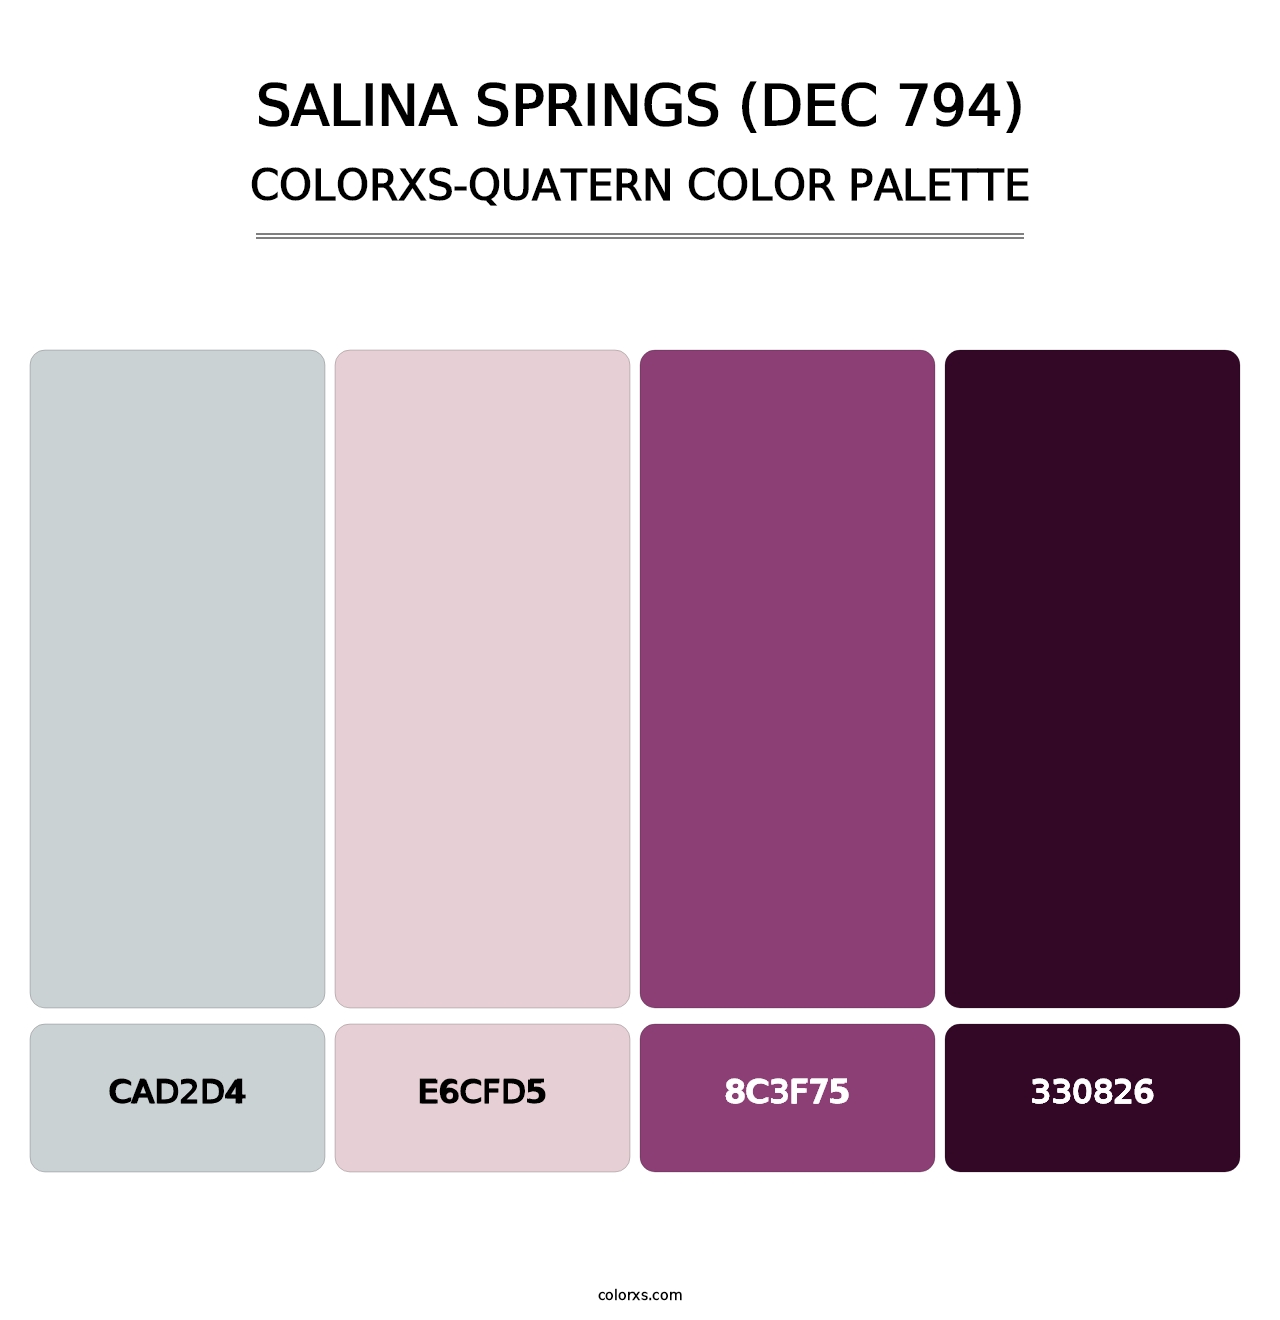 Salina Springs (DEC 794) - Colorxs Quatern Palette